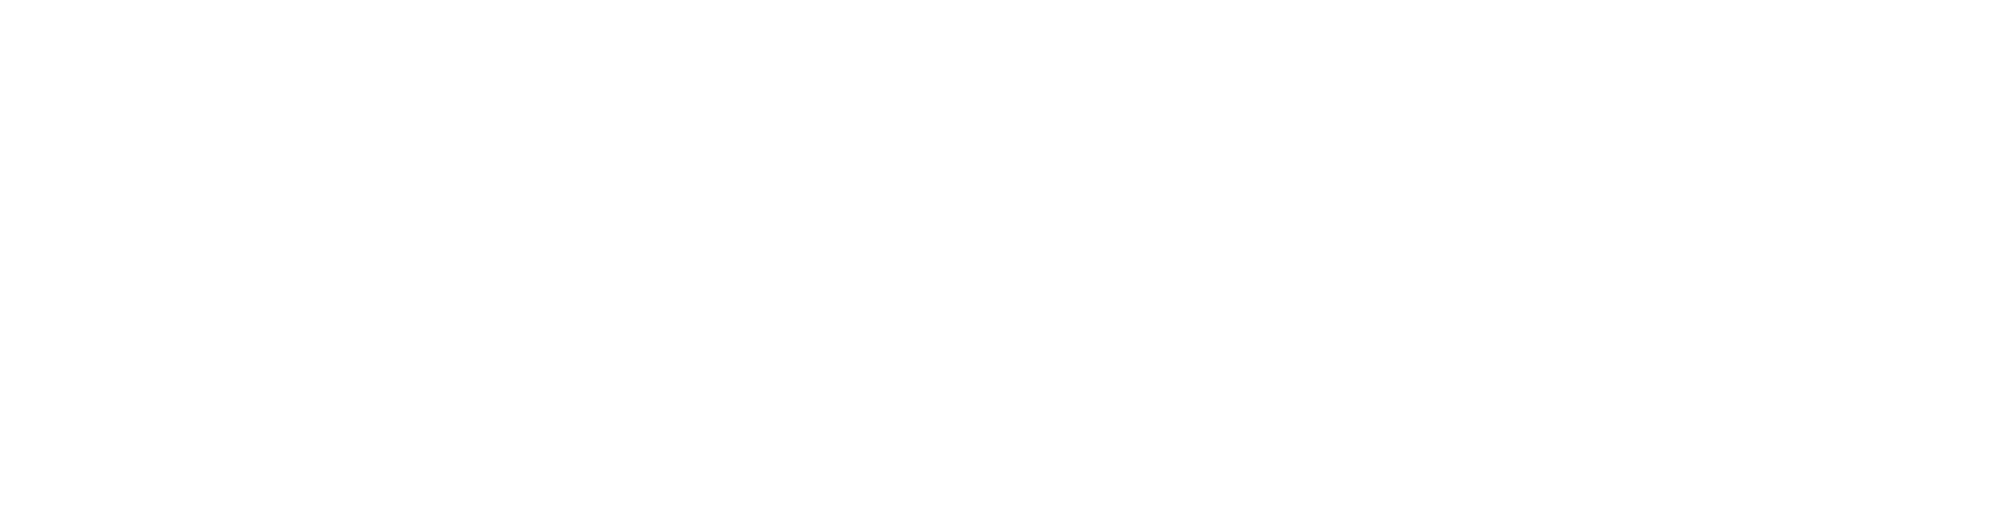 Tarrabin Consulting Ltd. - Leading the Way Forward